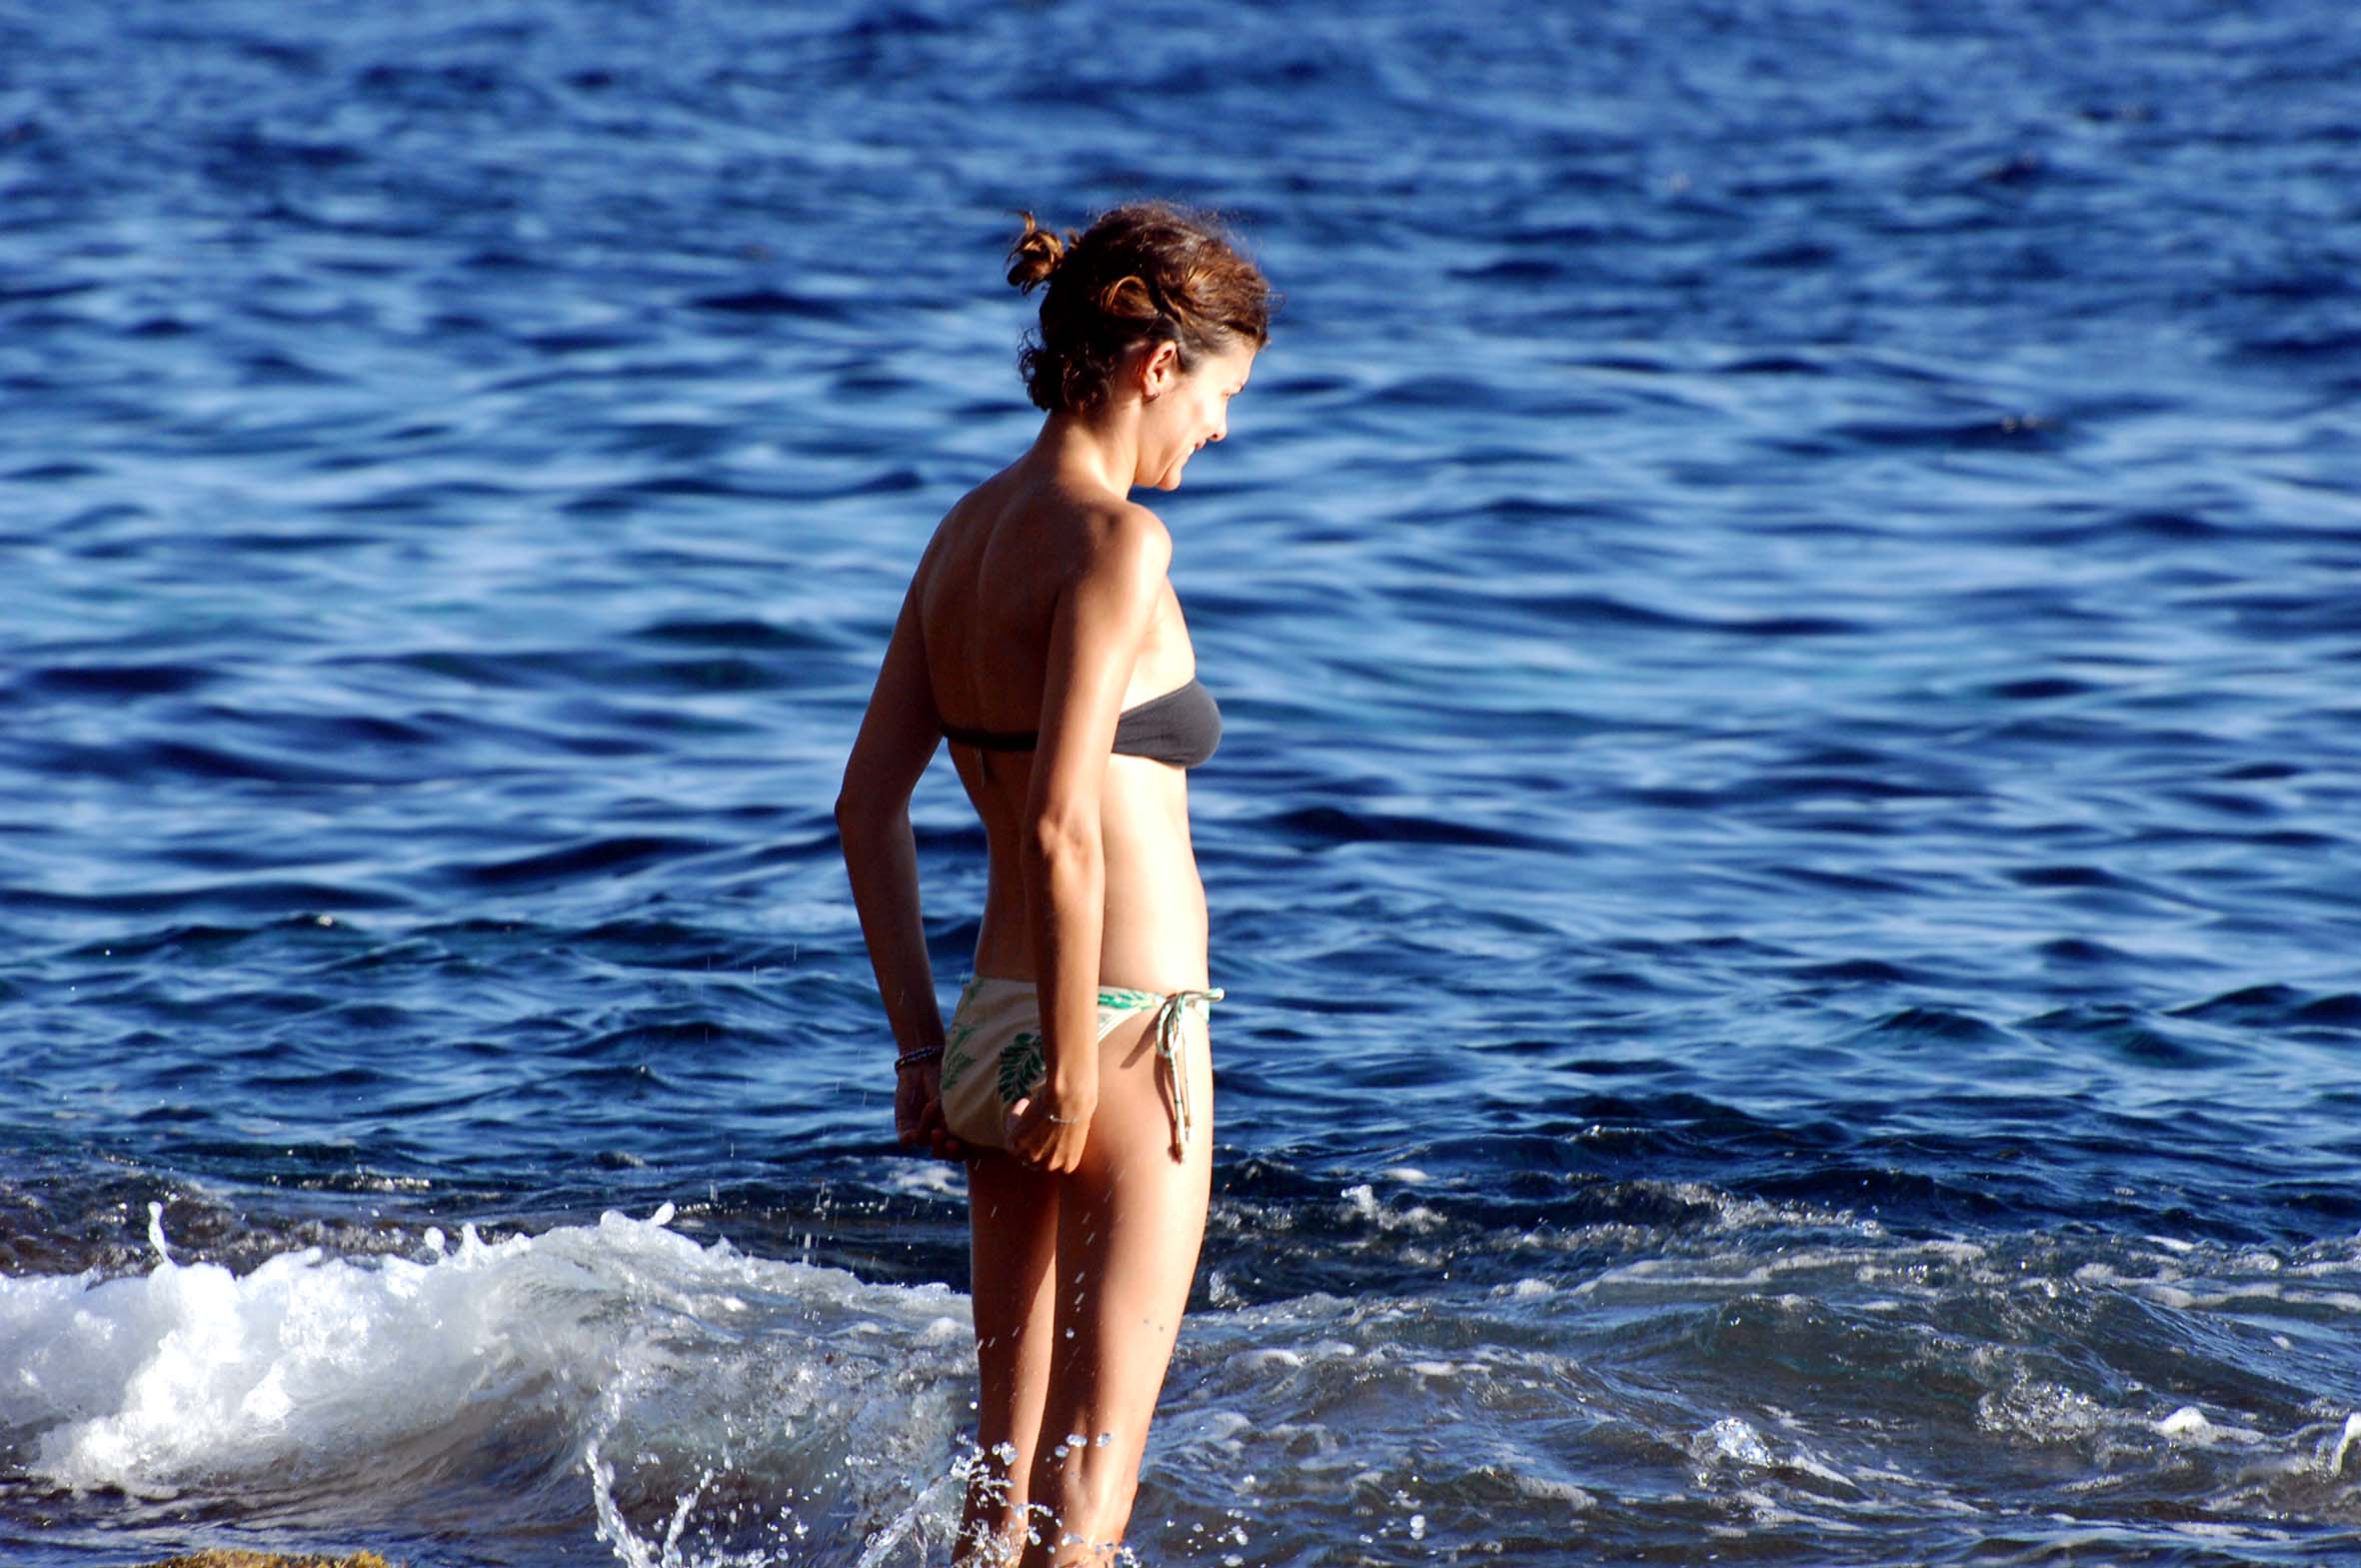 Audrey tautou bikini